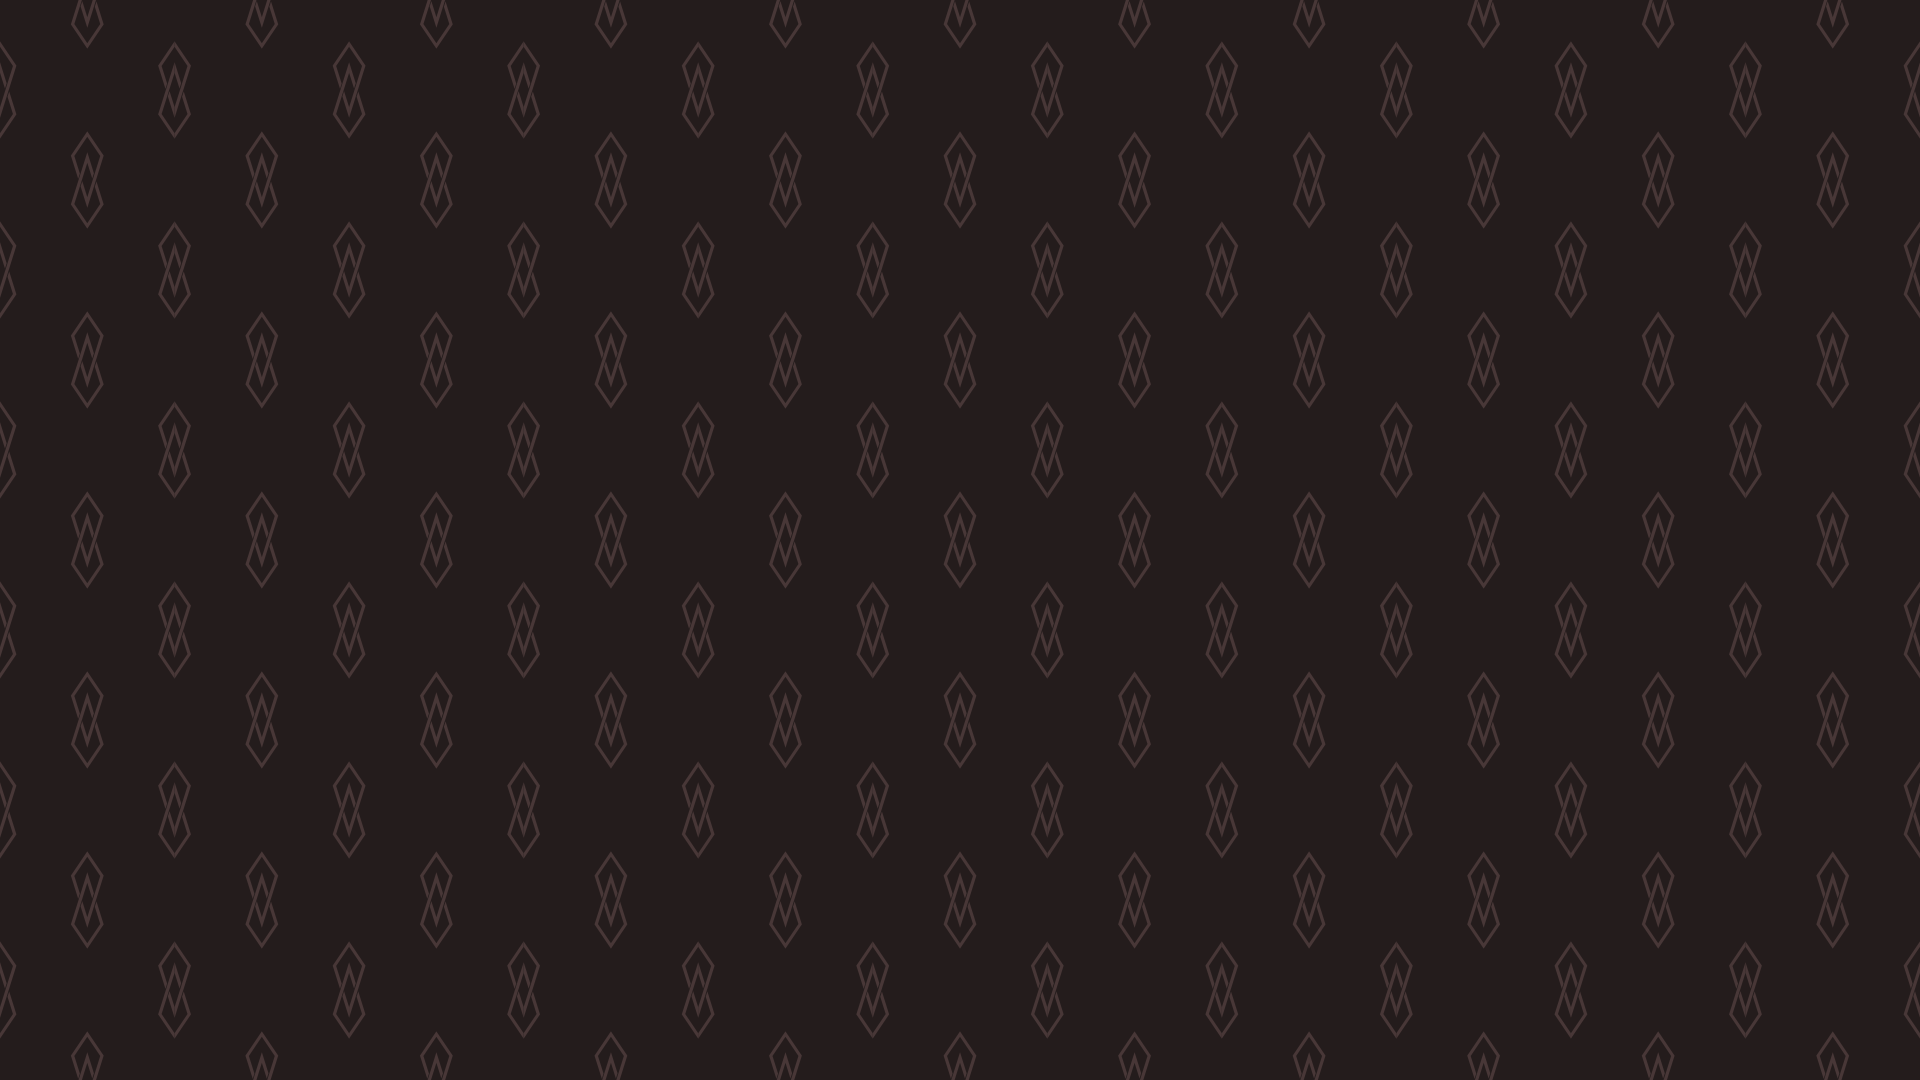 General 1920x1080 minimalism simple background pattern